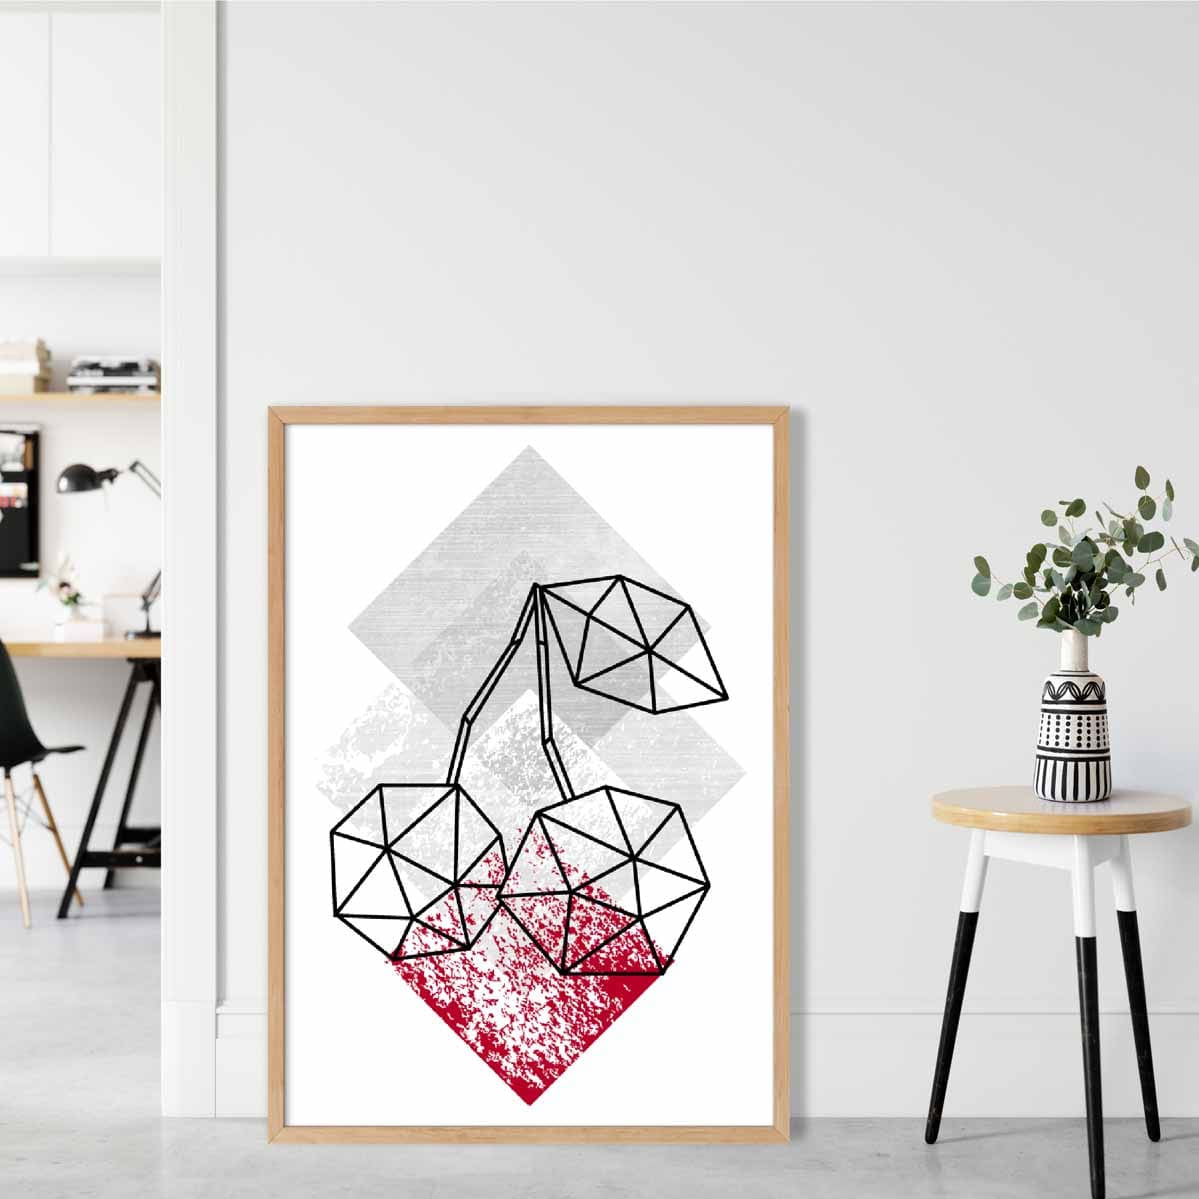 Geometric Fruit Line art Poster of Cherries Textured Red Grey